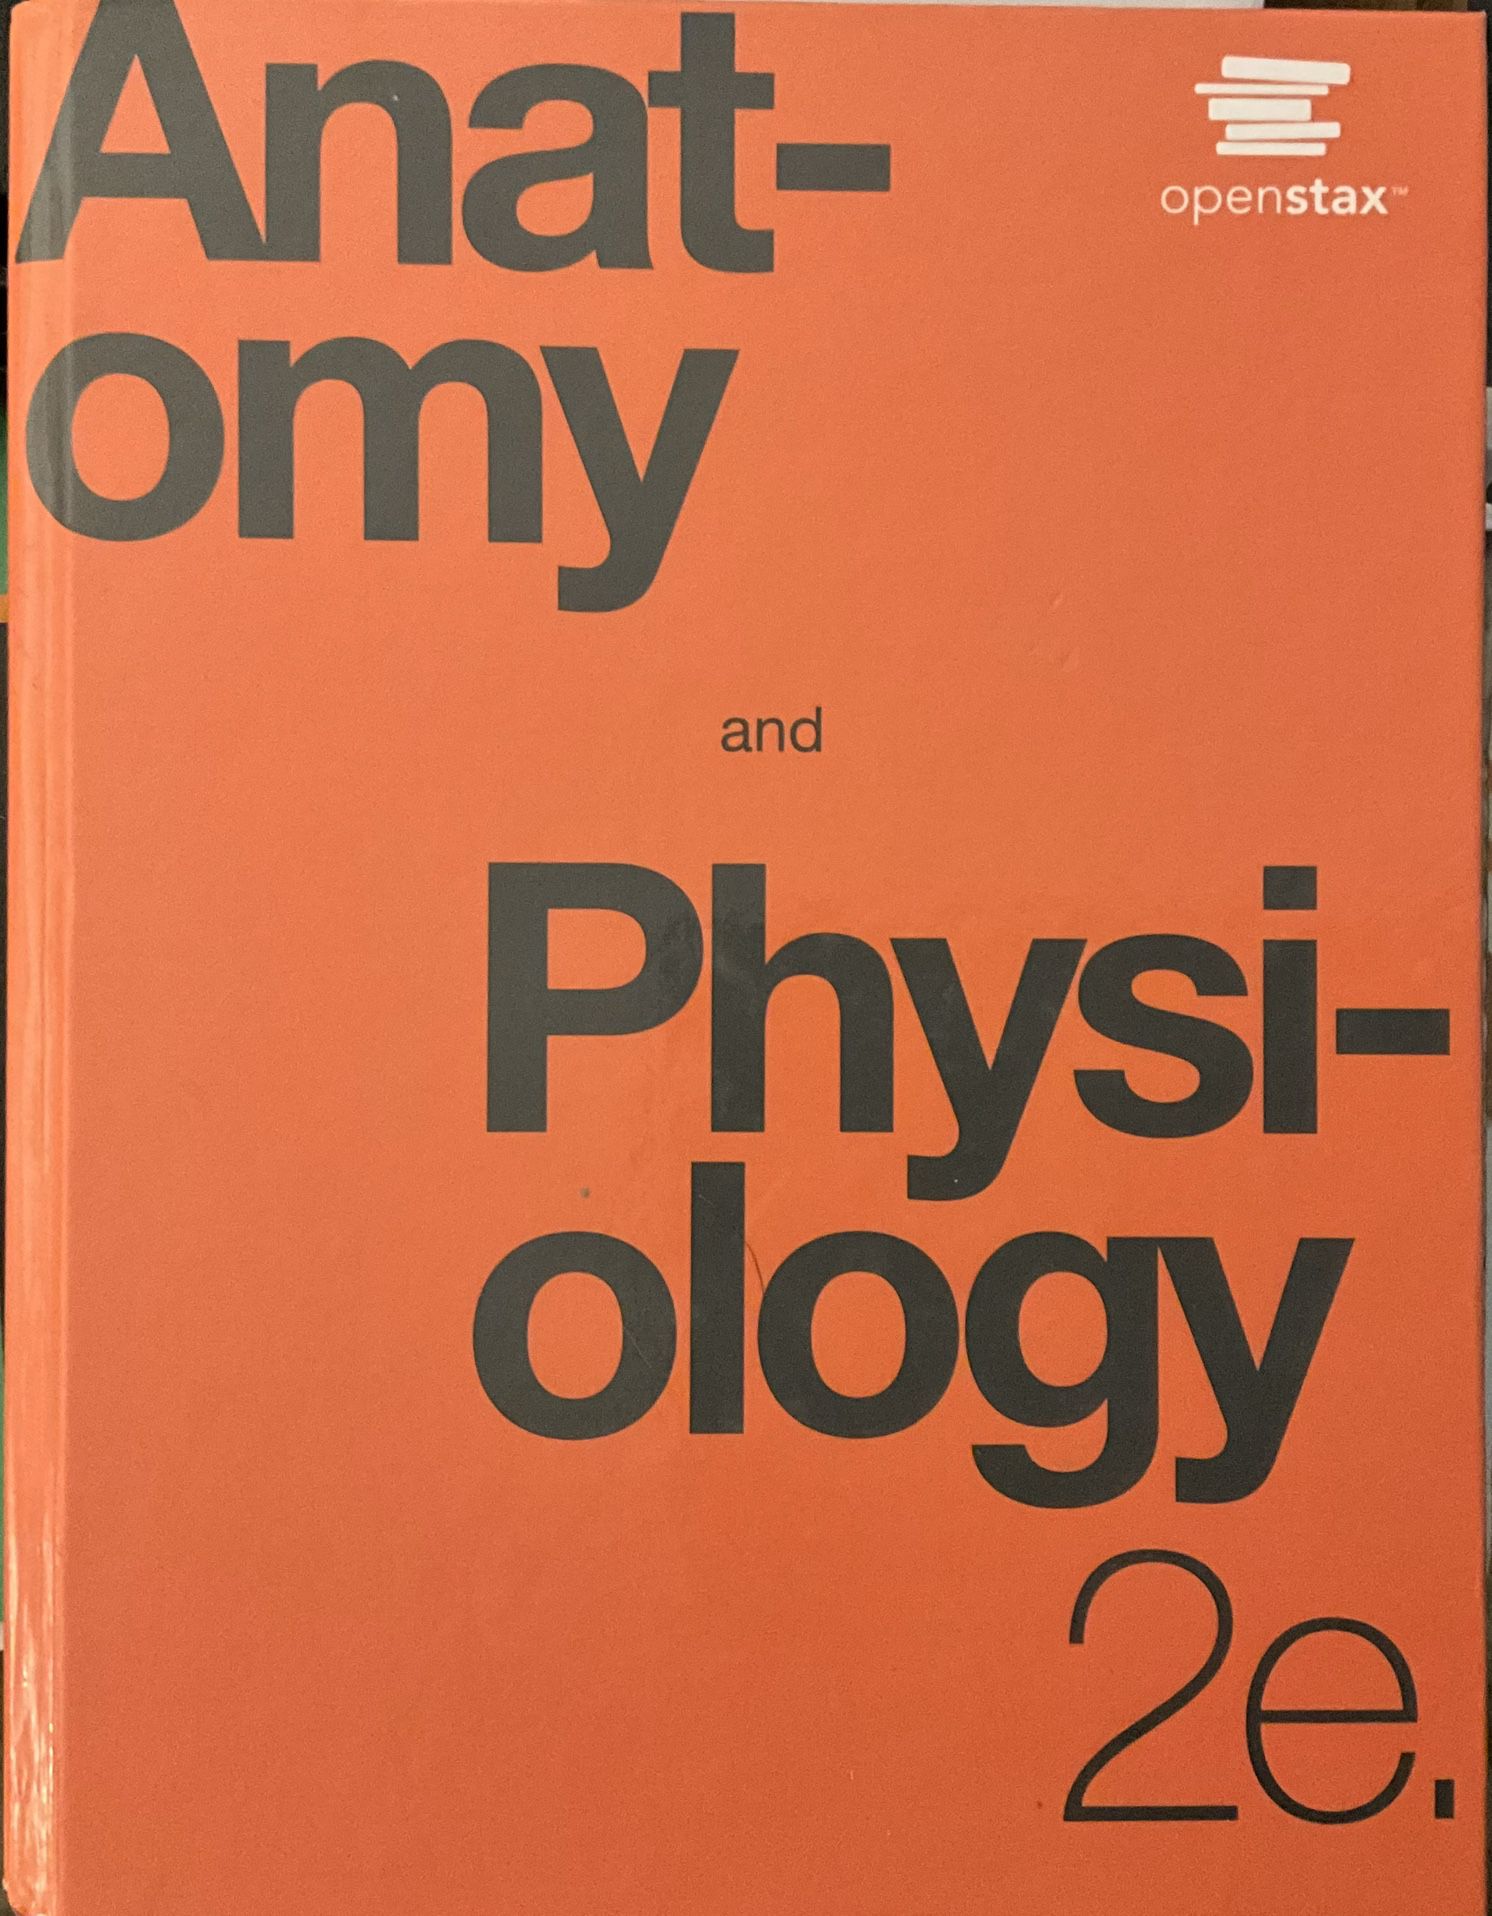 Anatomy & Physiology 2e Textbook For Sale!